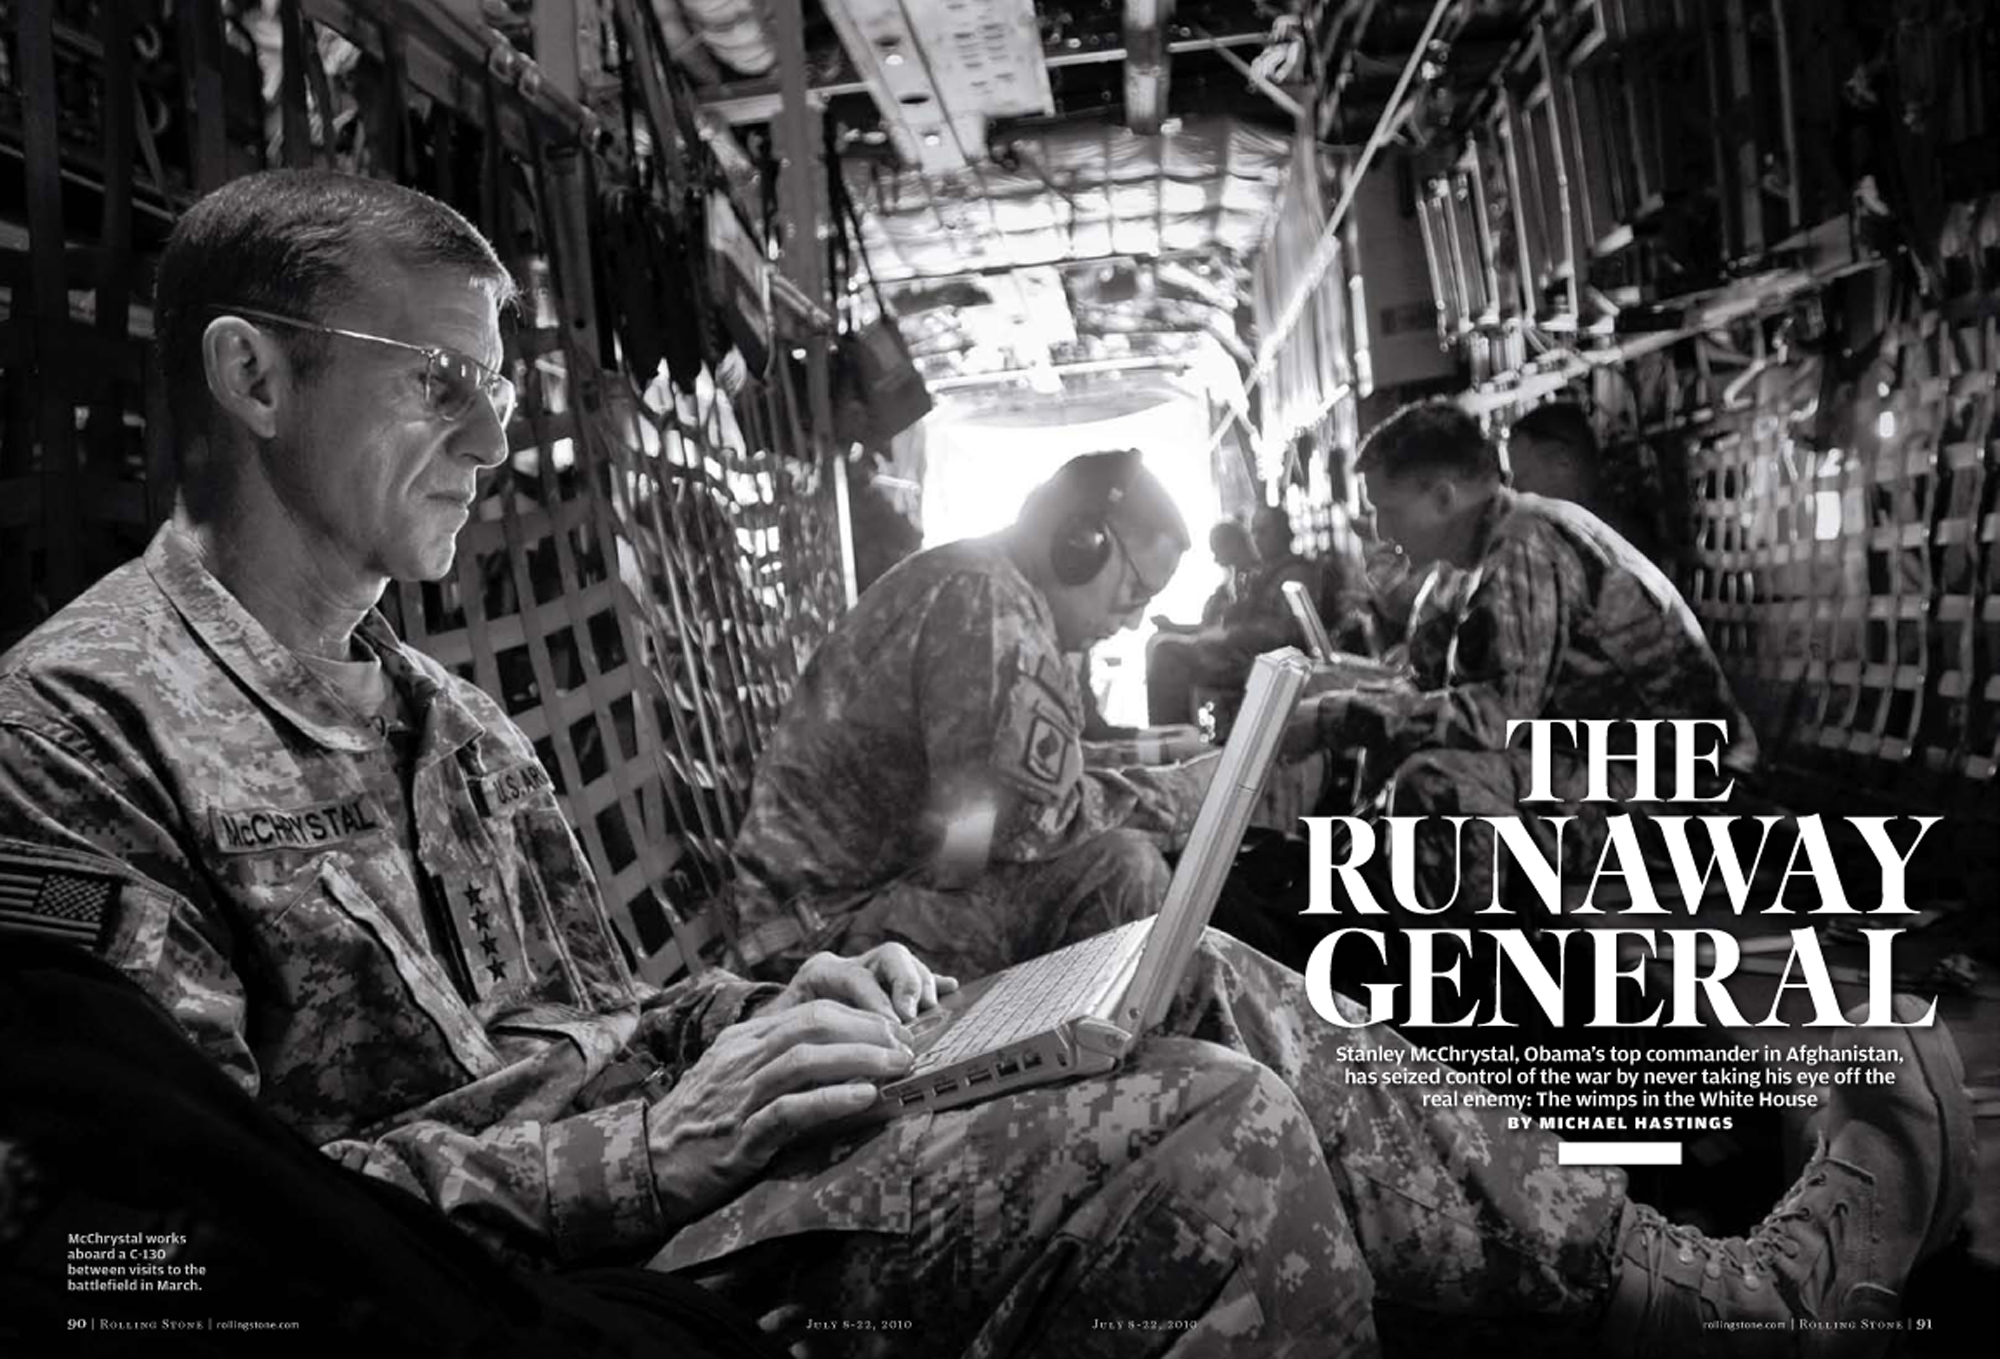 Barack Obama, Rolling Stone, Afghanistan, Stanley McChrystal